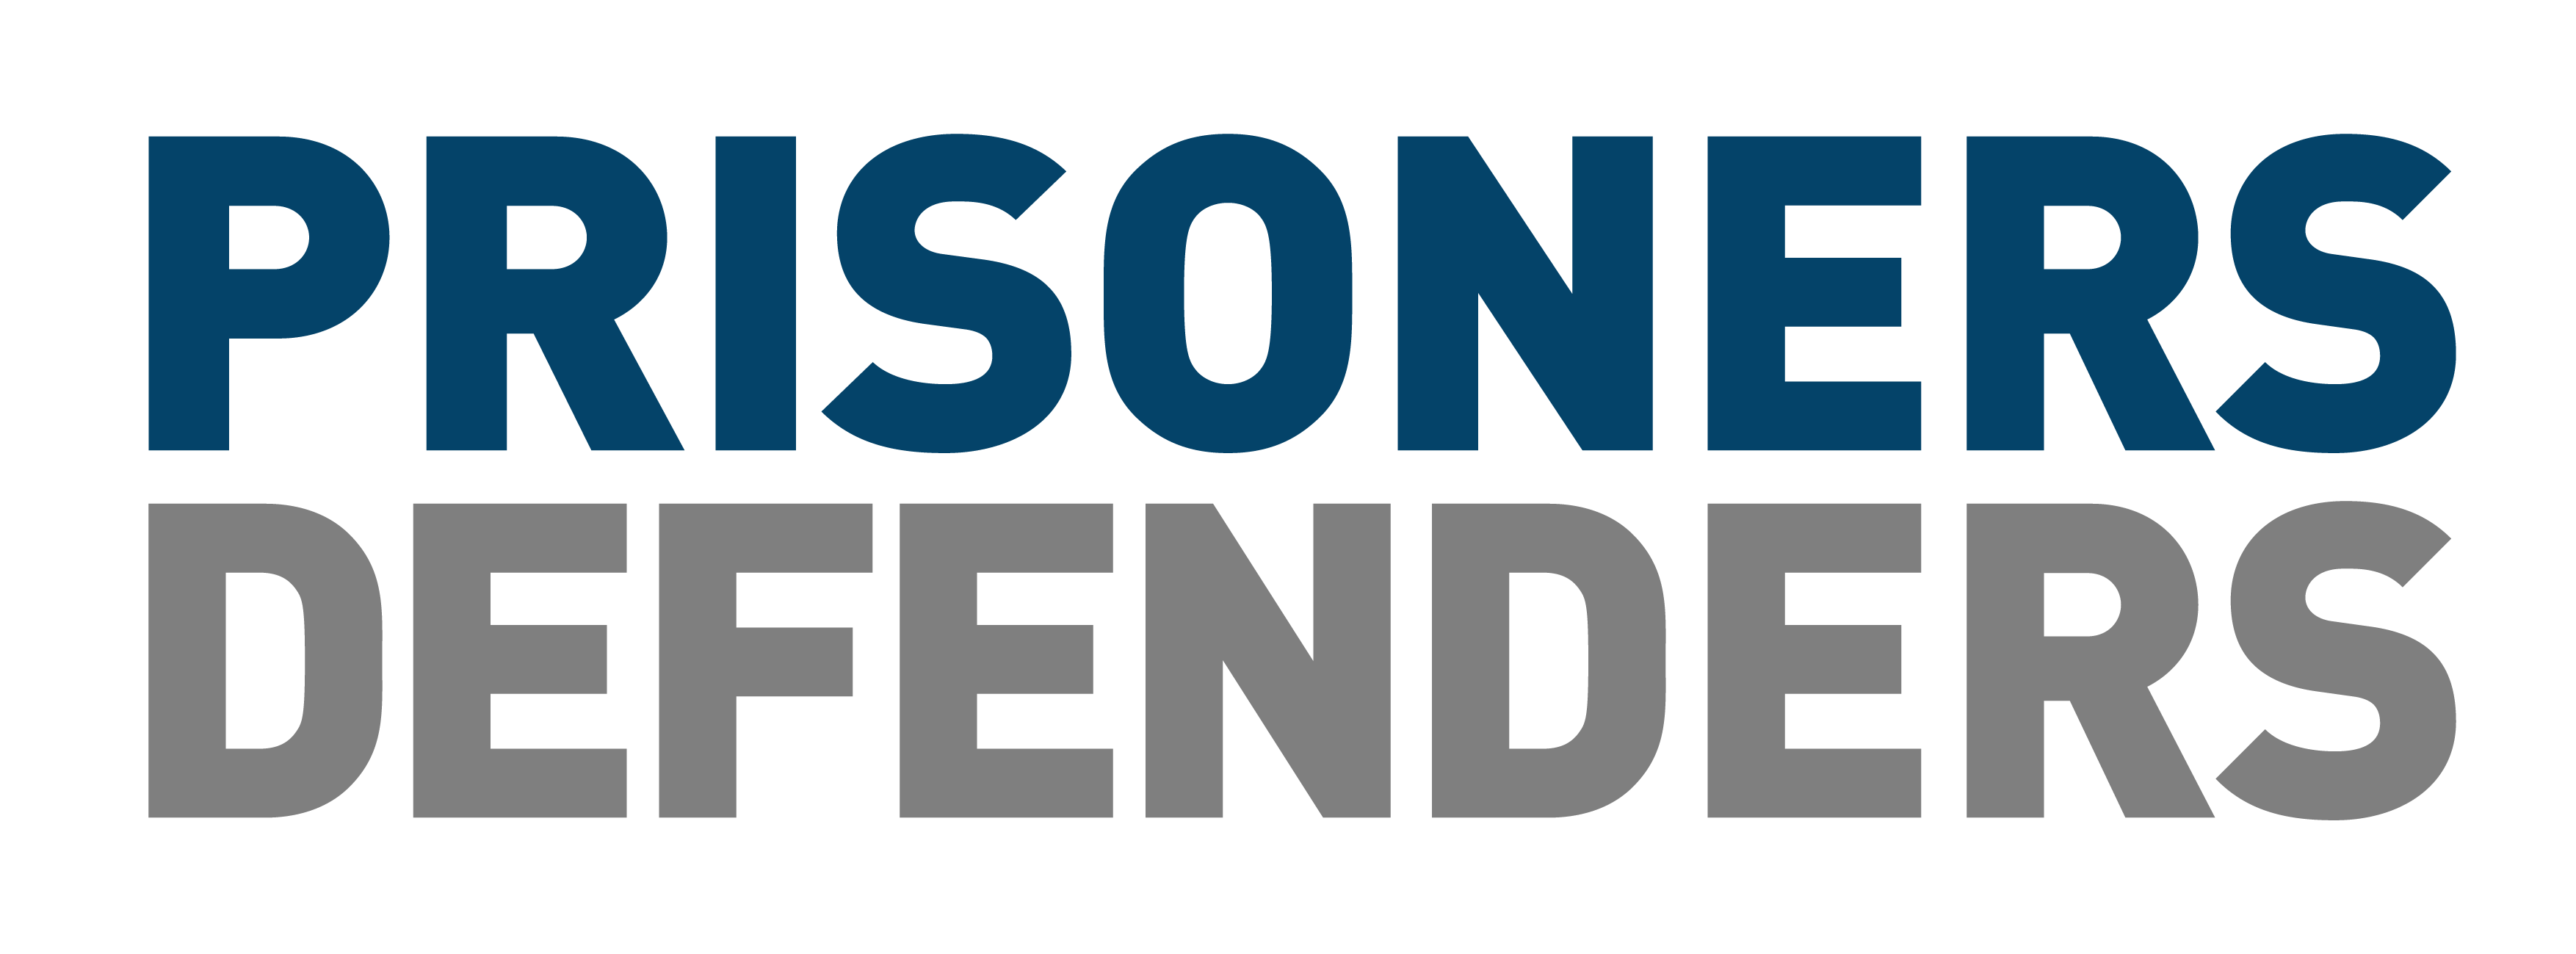 Prisoners Defenders Logotype